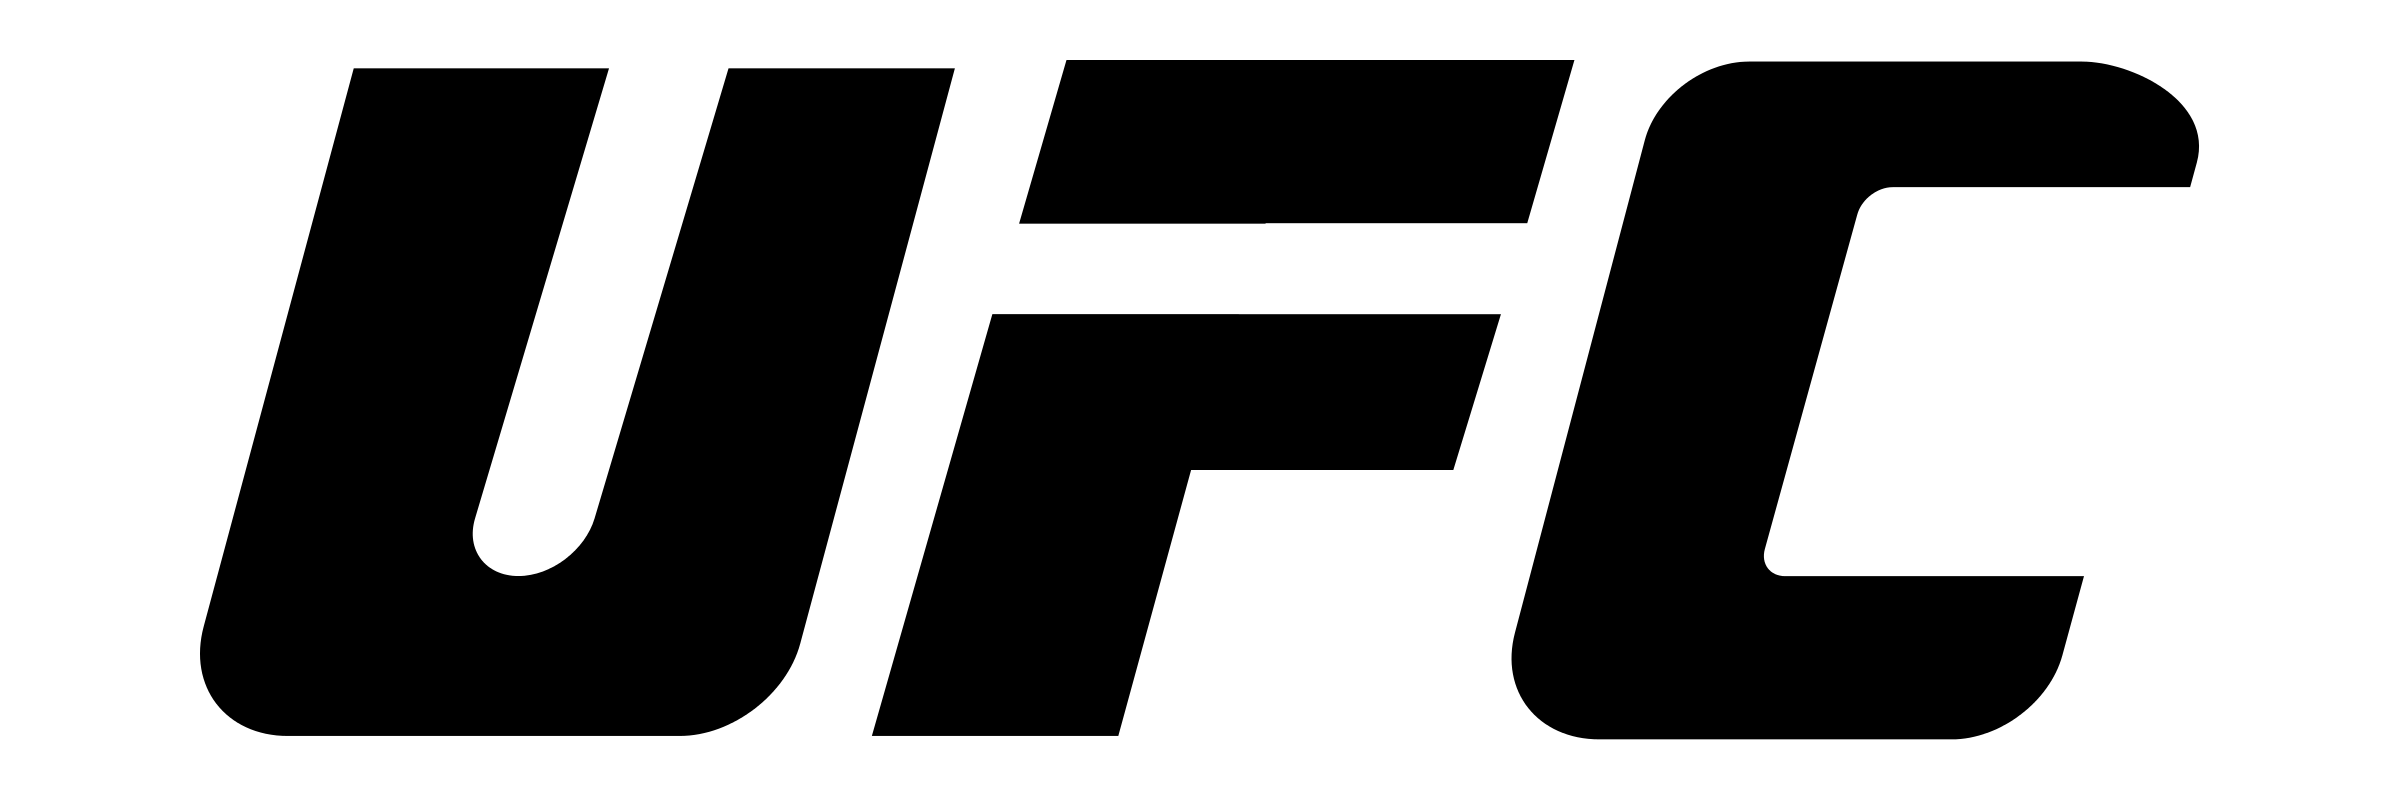 Ufc Logo PNG Image